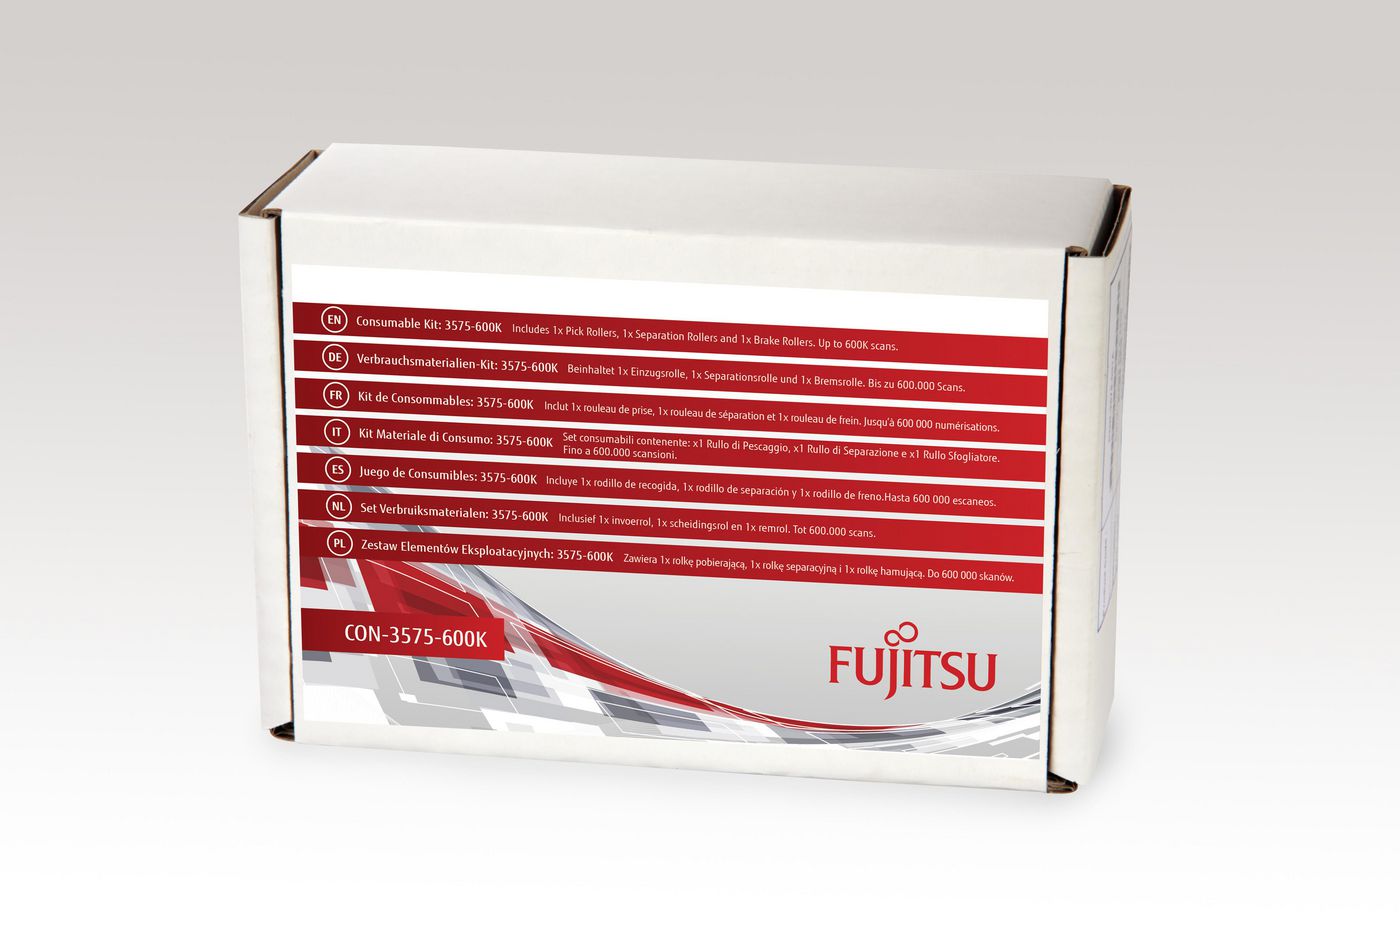 Fujitsu CON-3575-600K Consumable Kit 3575-600K 